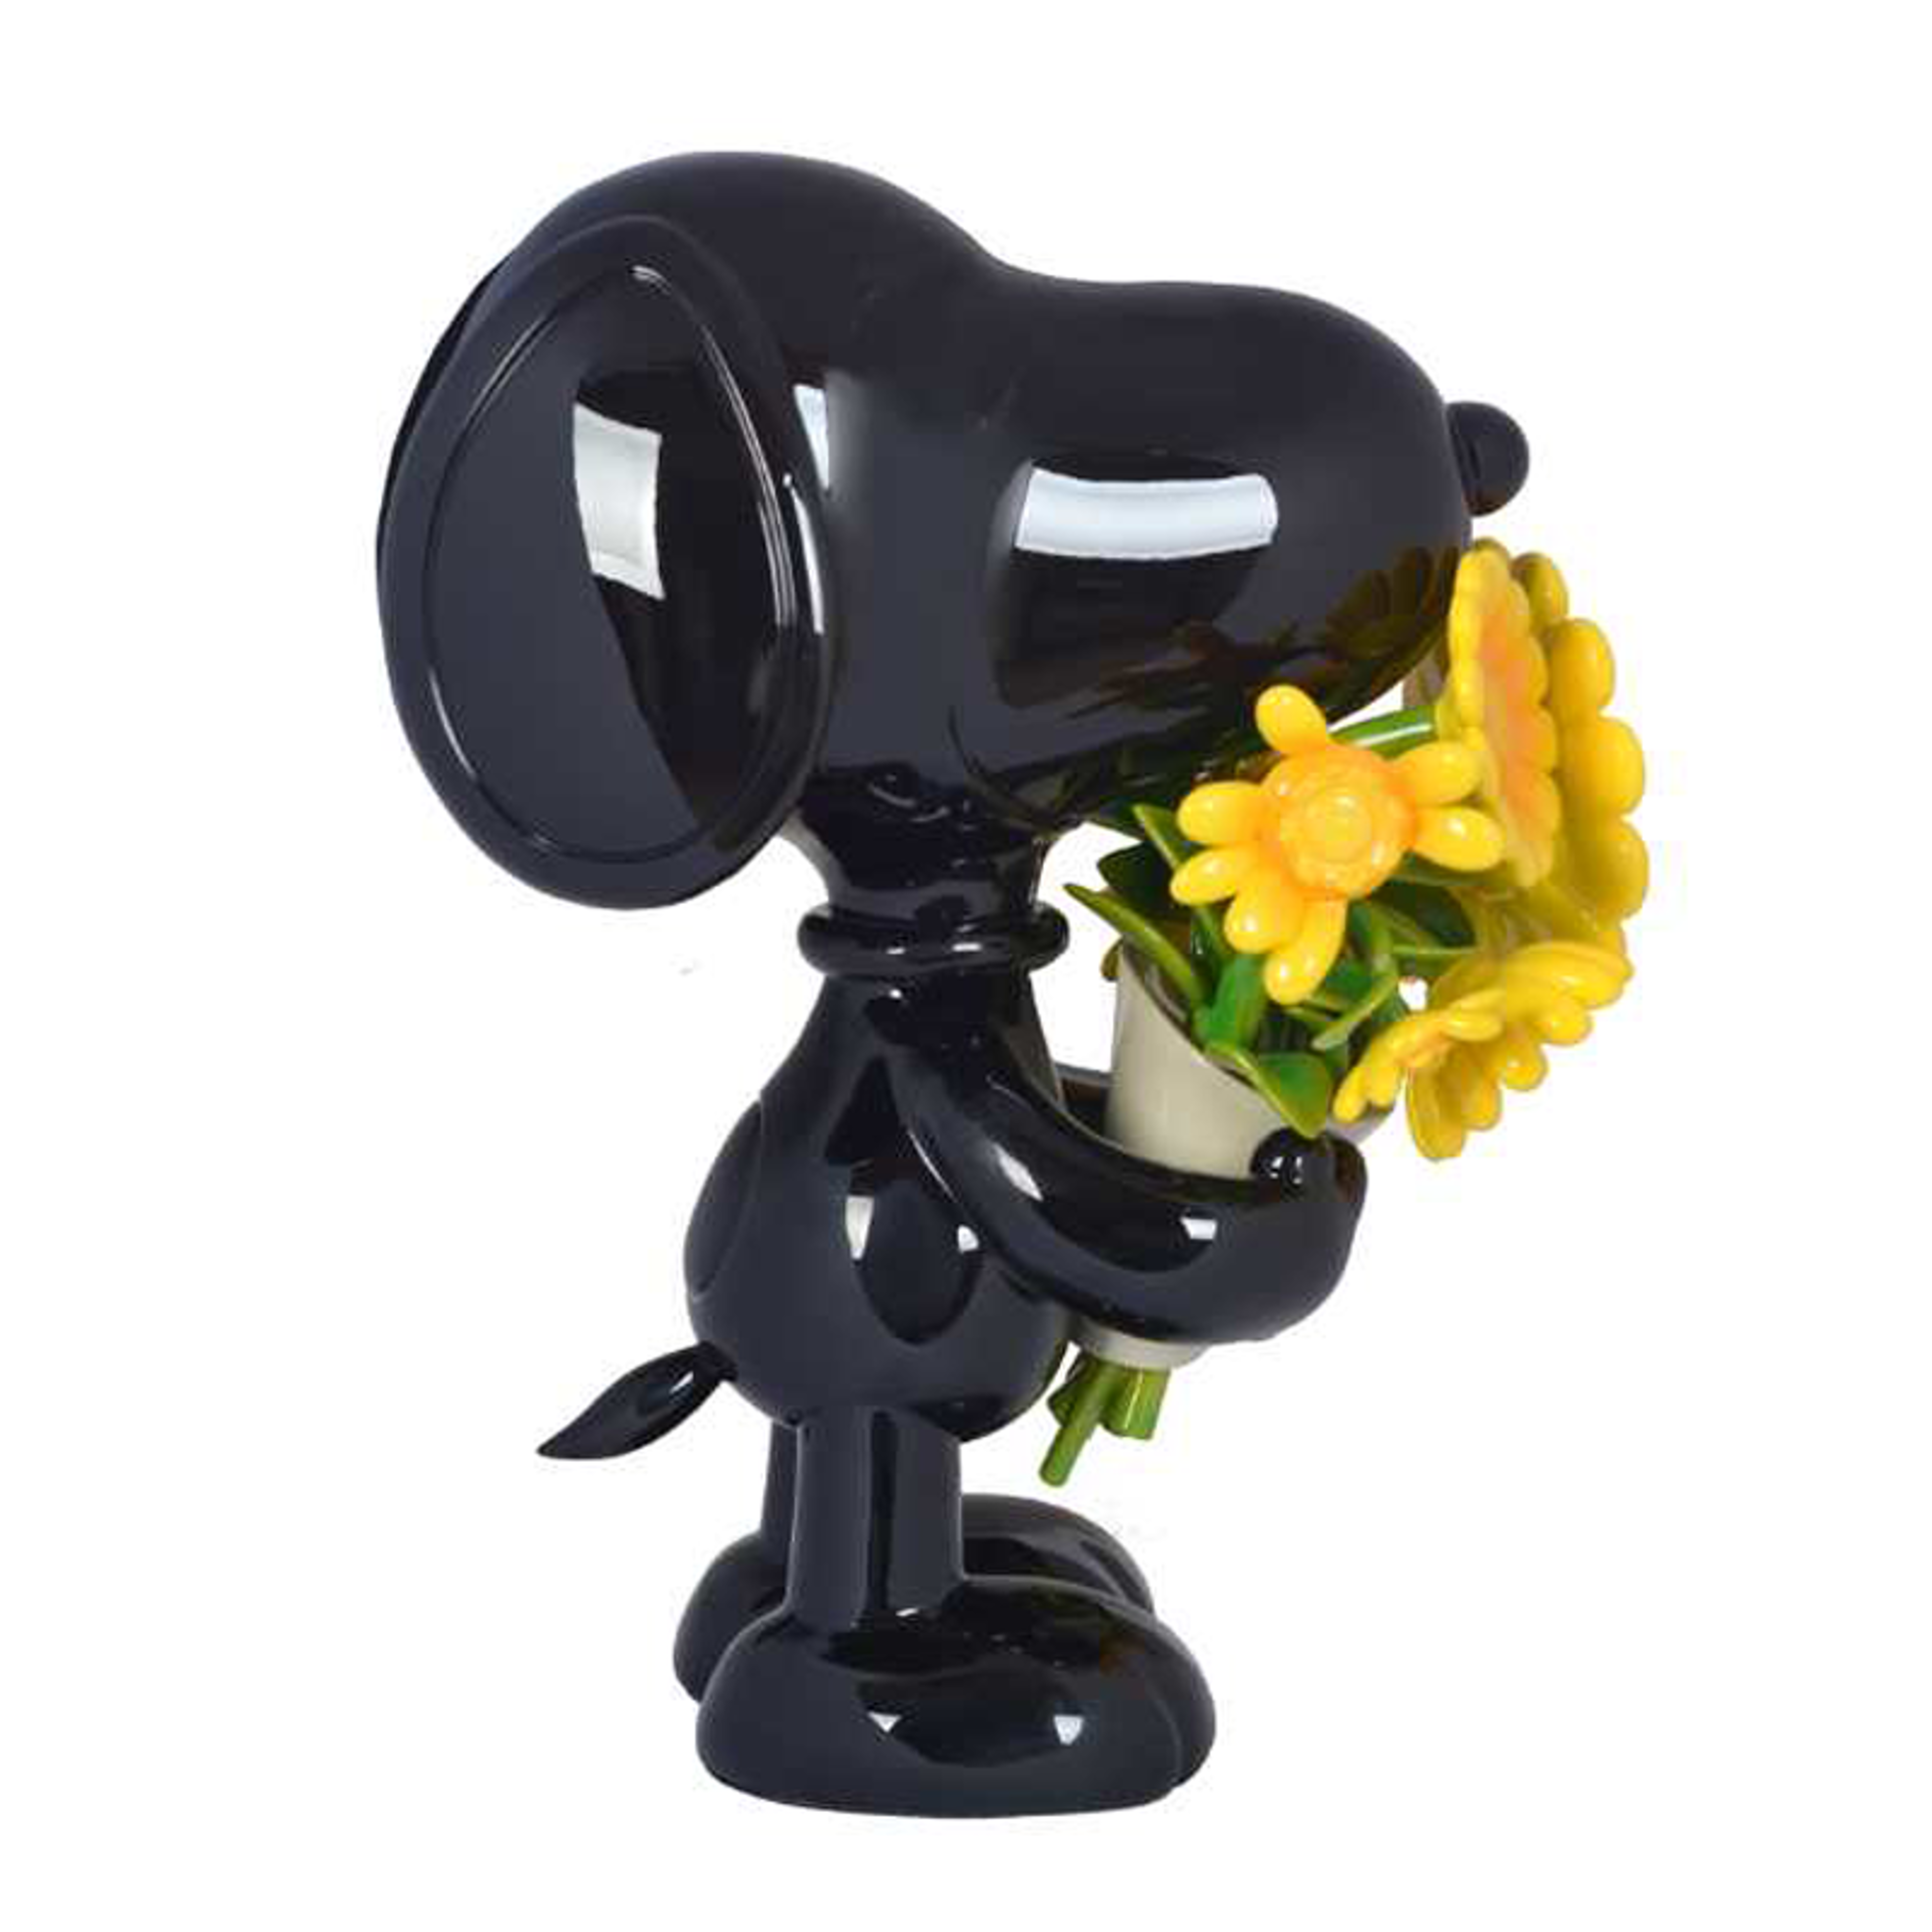 Alternate View 1 of Snoopy Gloss Black | Flower